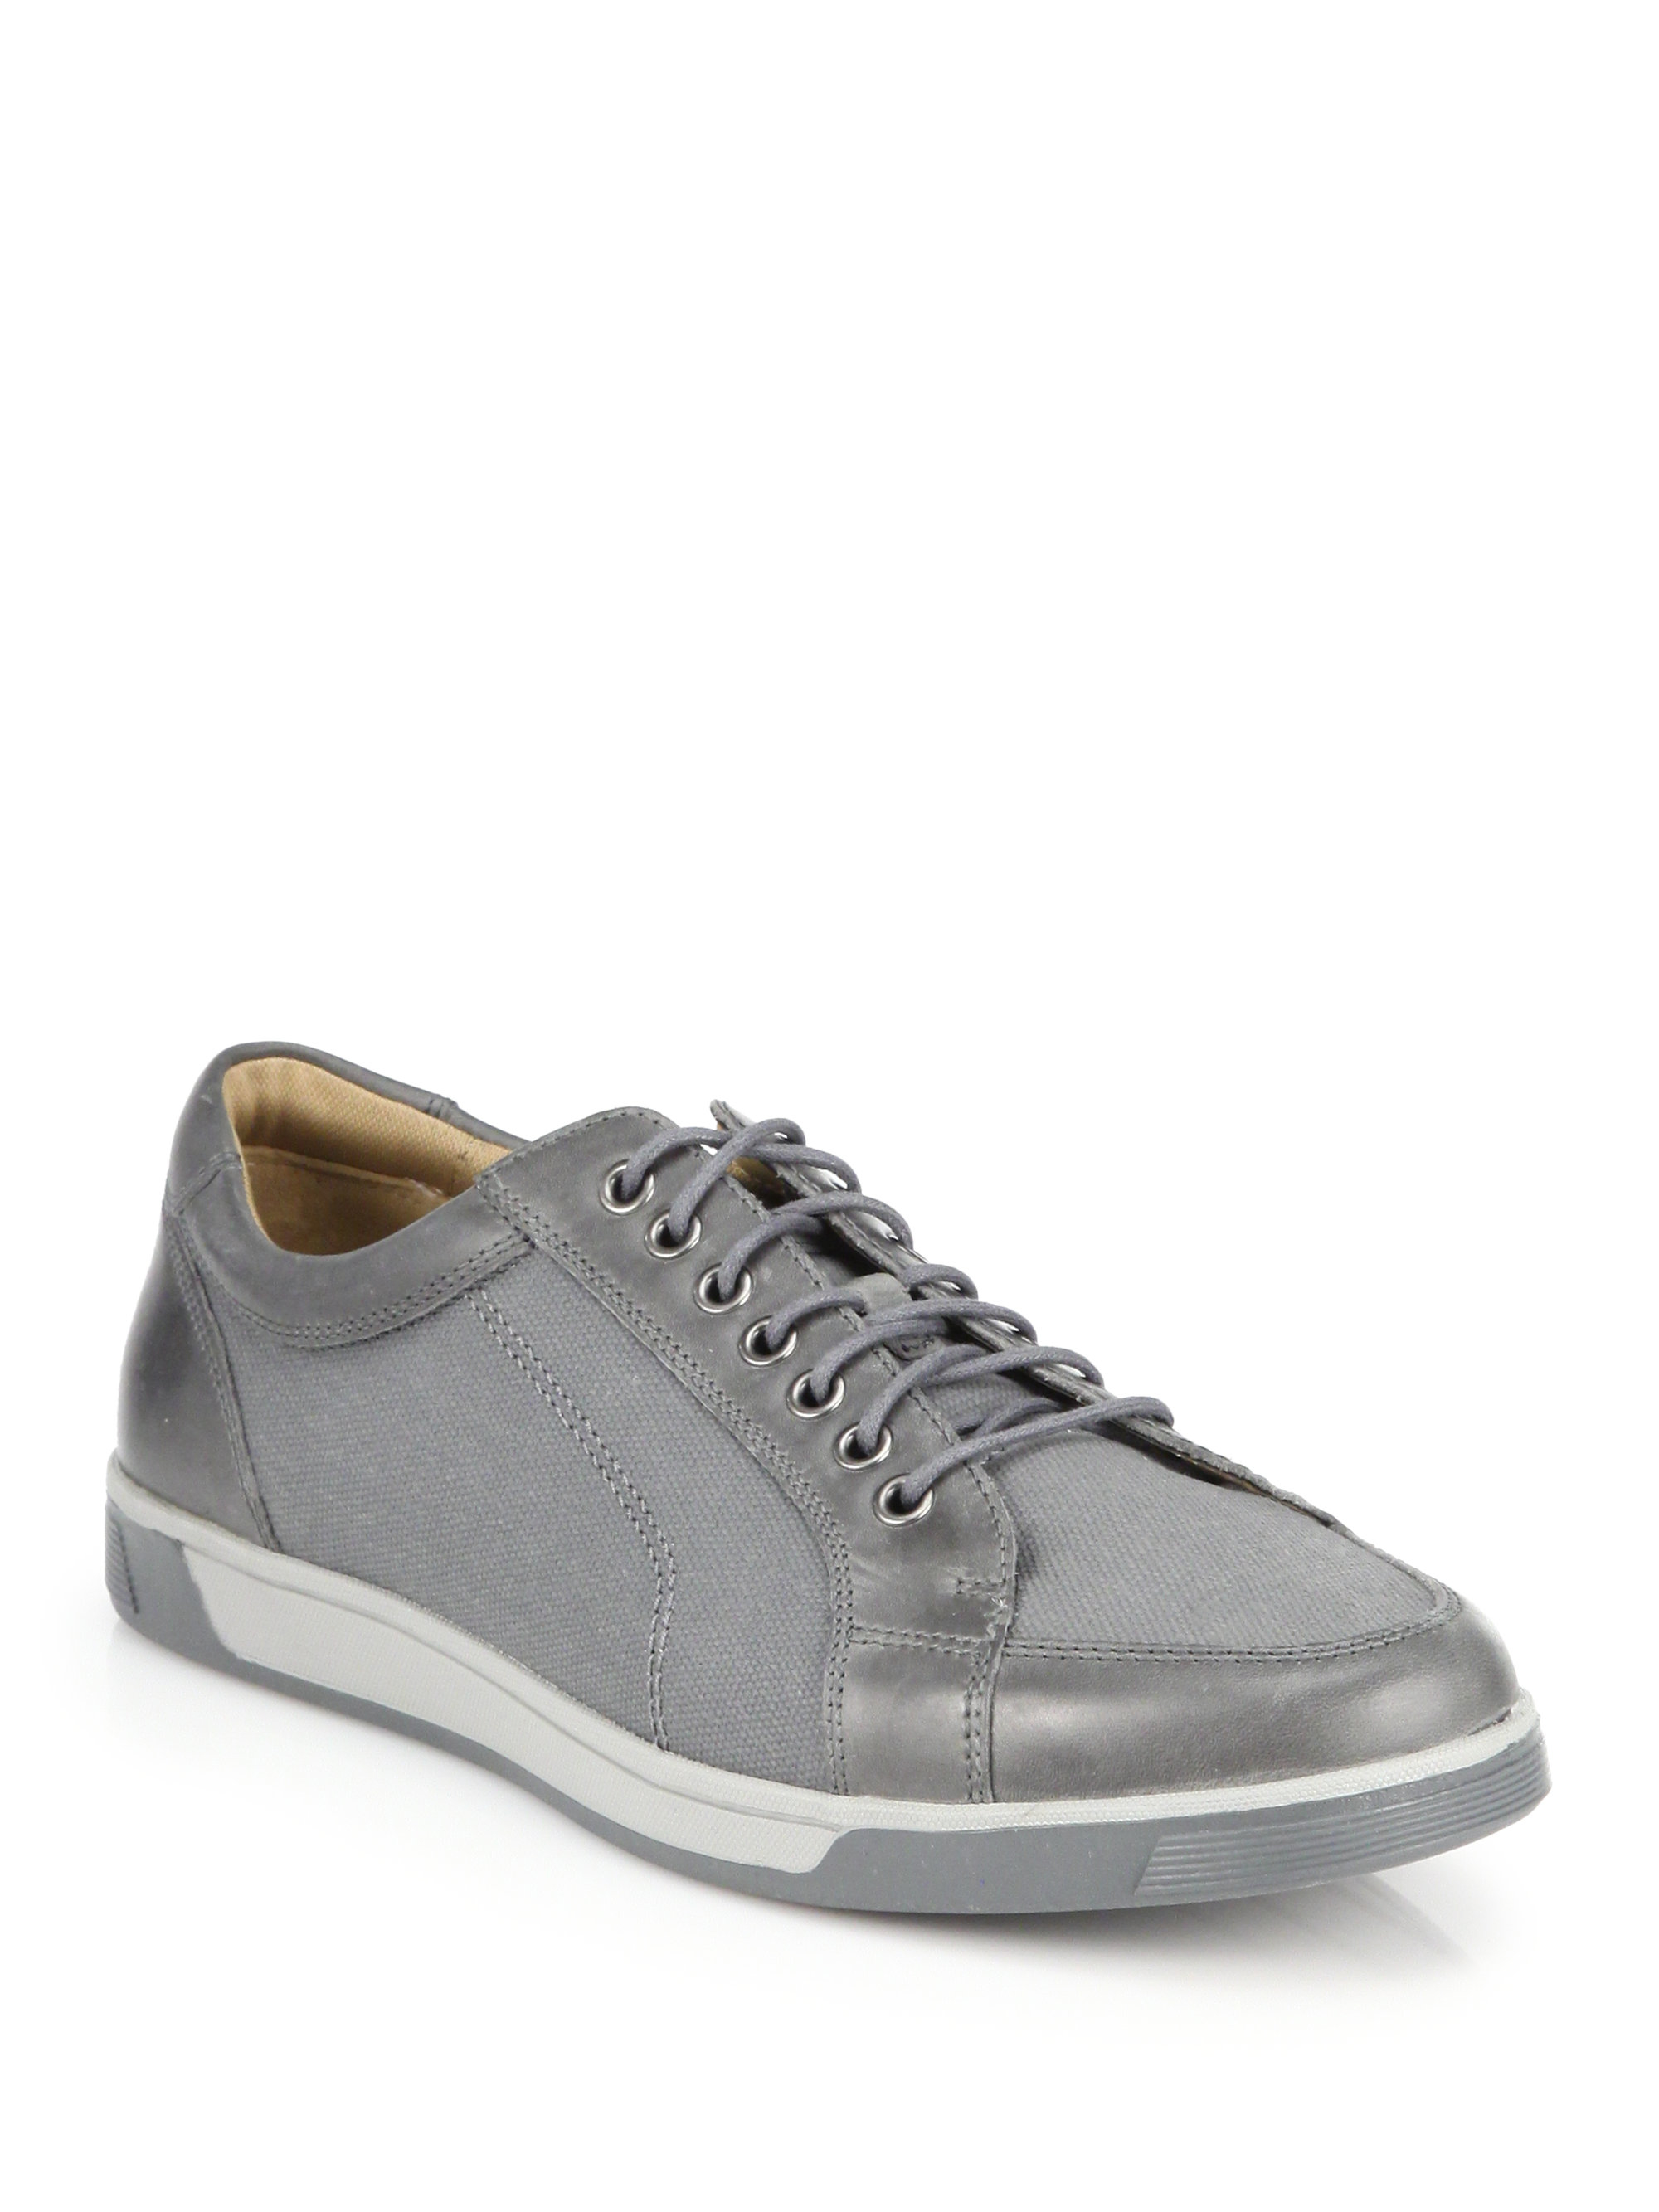 Cole haan Vartan Sport Metallic Nylon & Leather Sneakers in Gray for ...